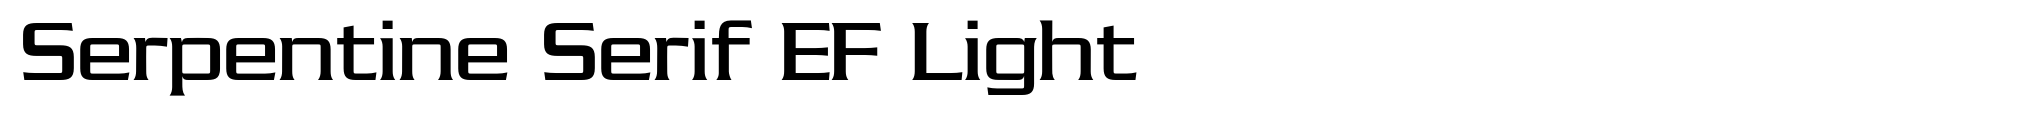 Serpentine Serif EF Light image